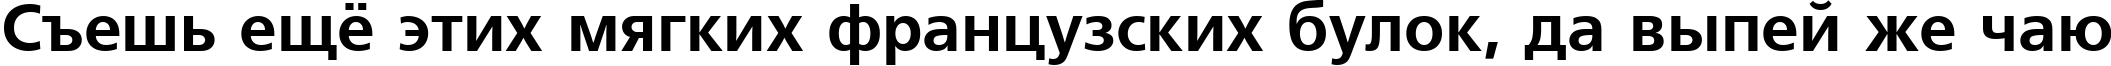 Пример написания шрифтом FreeSet Bold Cyrillic текста на русском